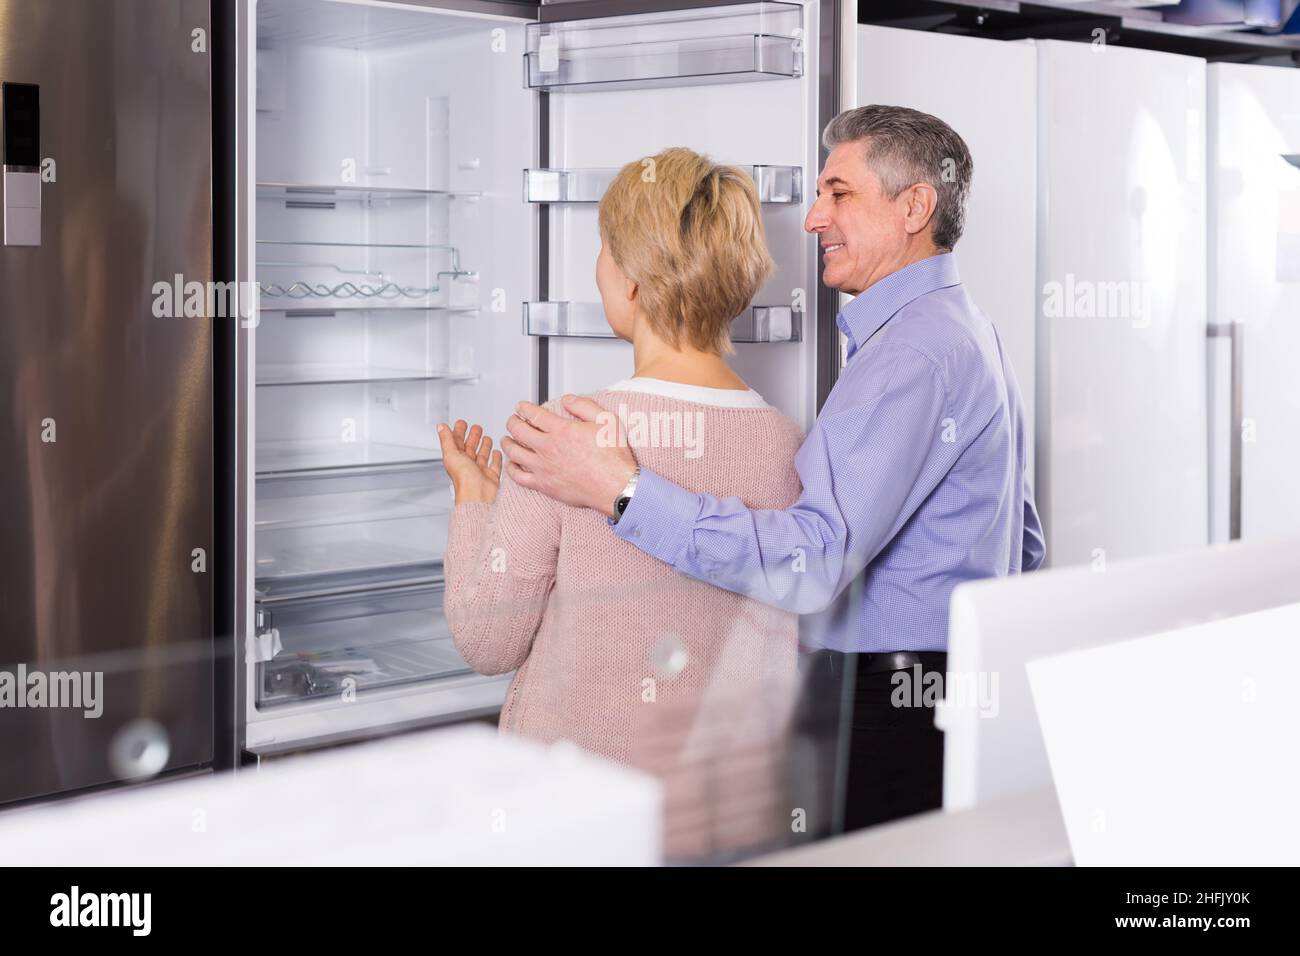 https://c8.alamy.com/comp/2HFJY0K/interested-mature-married-couple-in-shop-of-household-appliances-are-choosing-home-modern-refrigerator-2HFJY0K.jpg